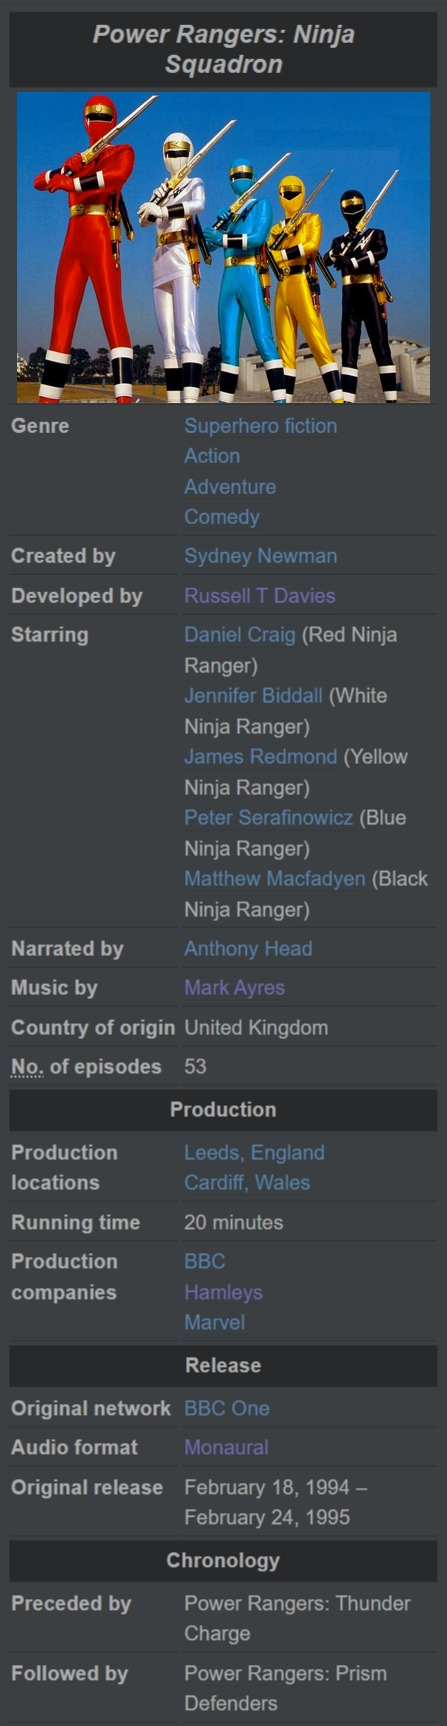 1994-Power Rangers Ninja Squadron.jpg